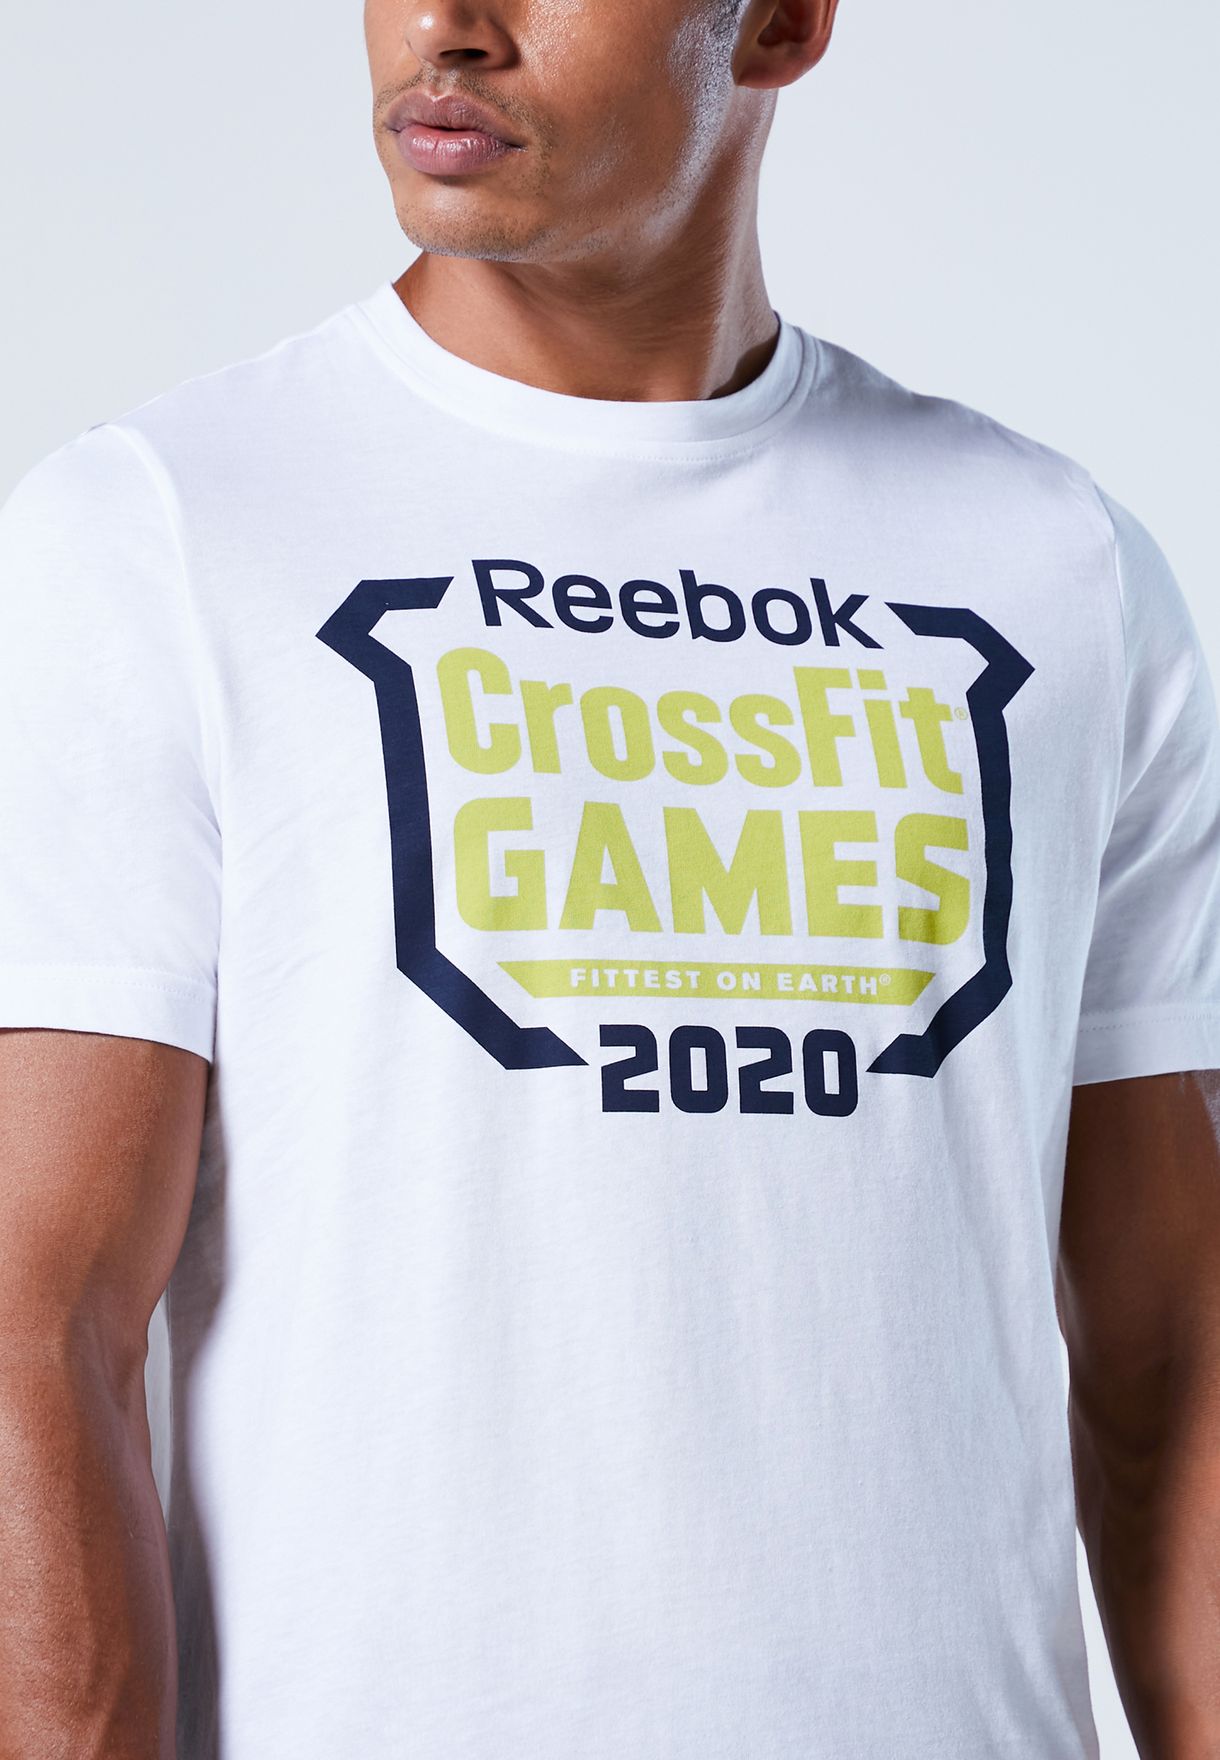 reebok crossfit games t shirt